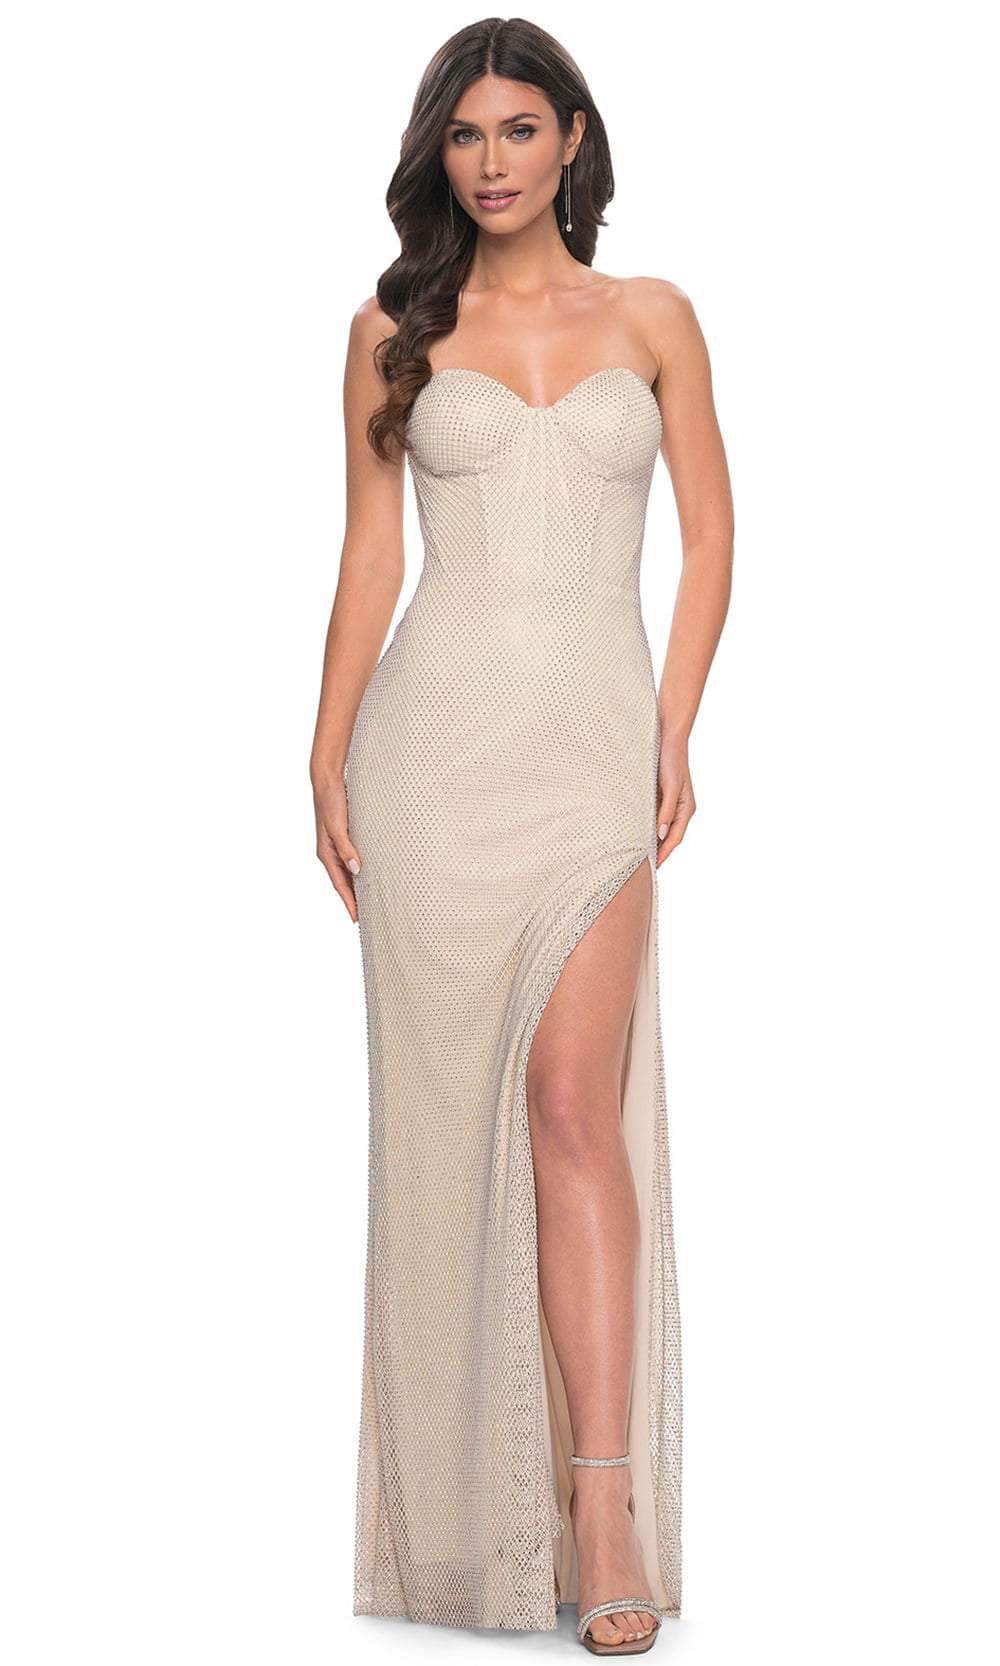 La Femme 32414 - Strapless Sweetheart Neck Prom Dress Prom Dresses 00 / Champagne